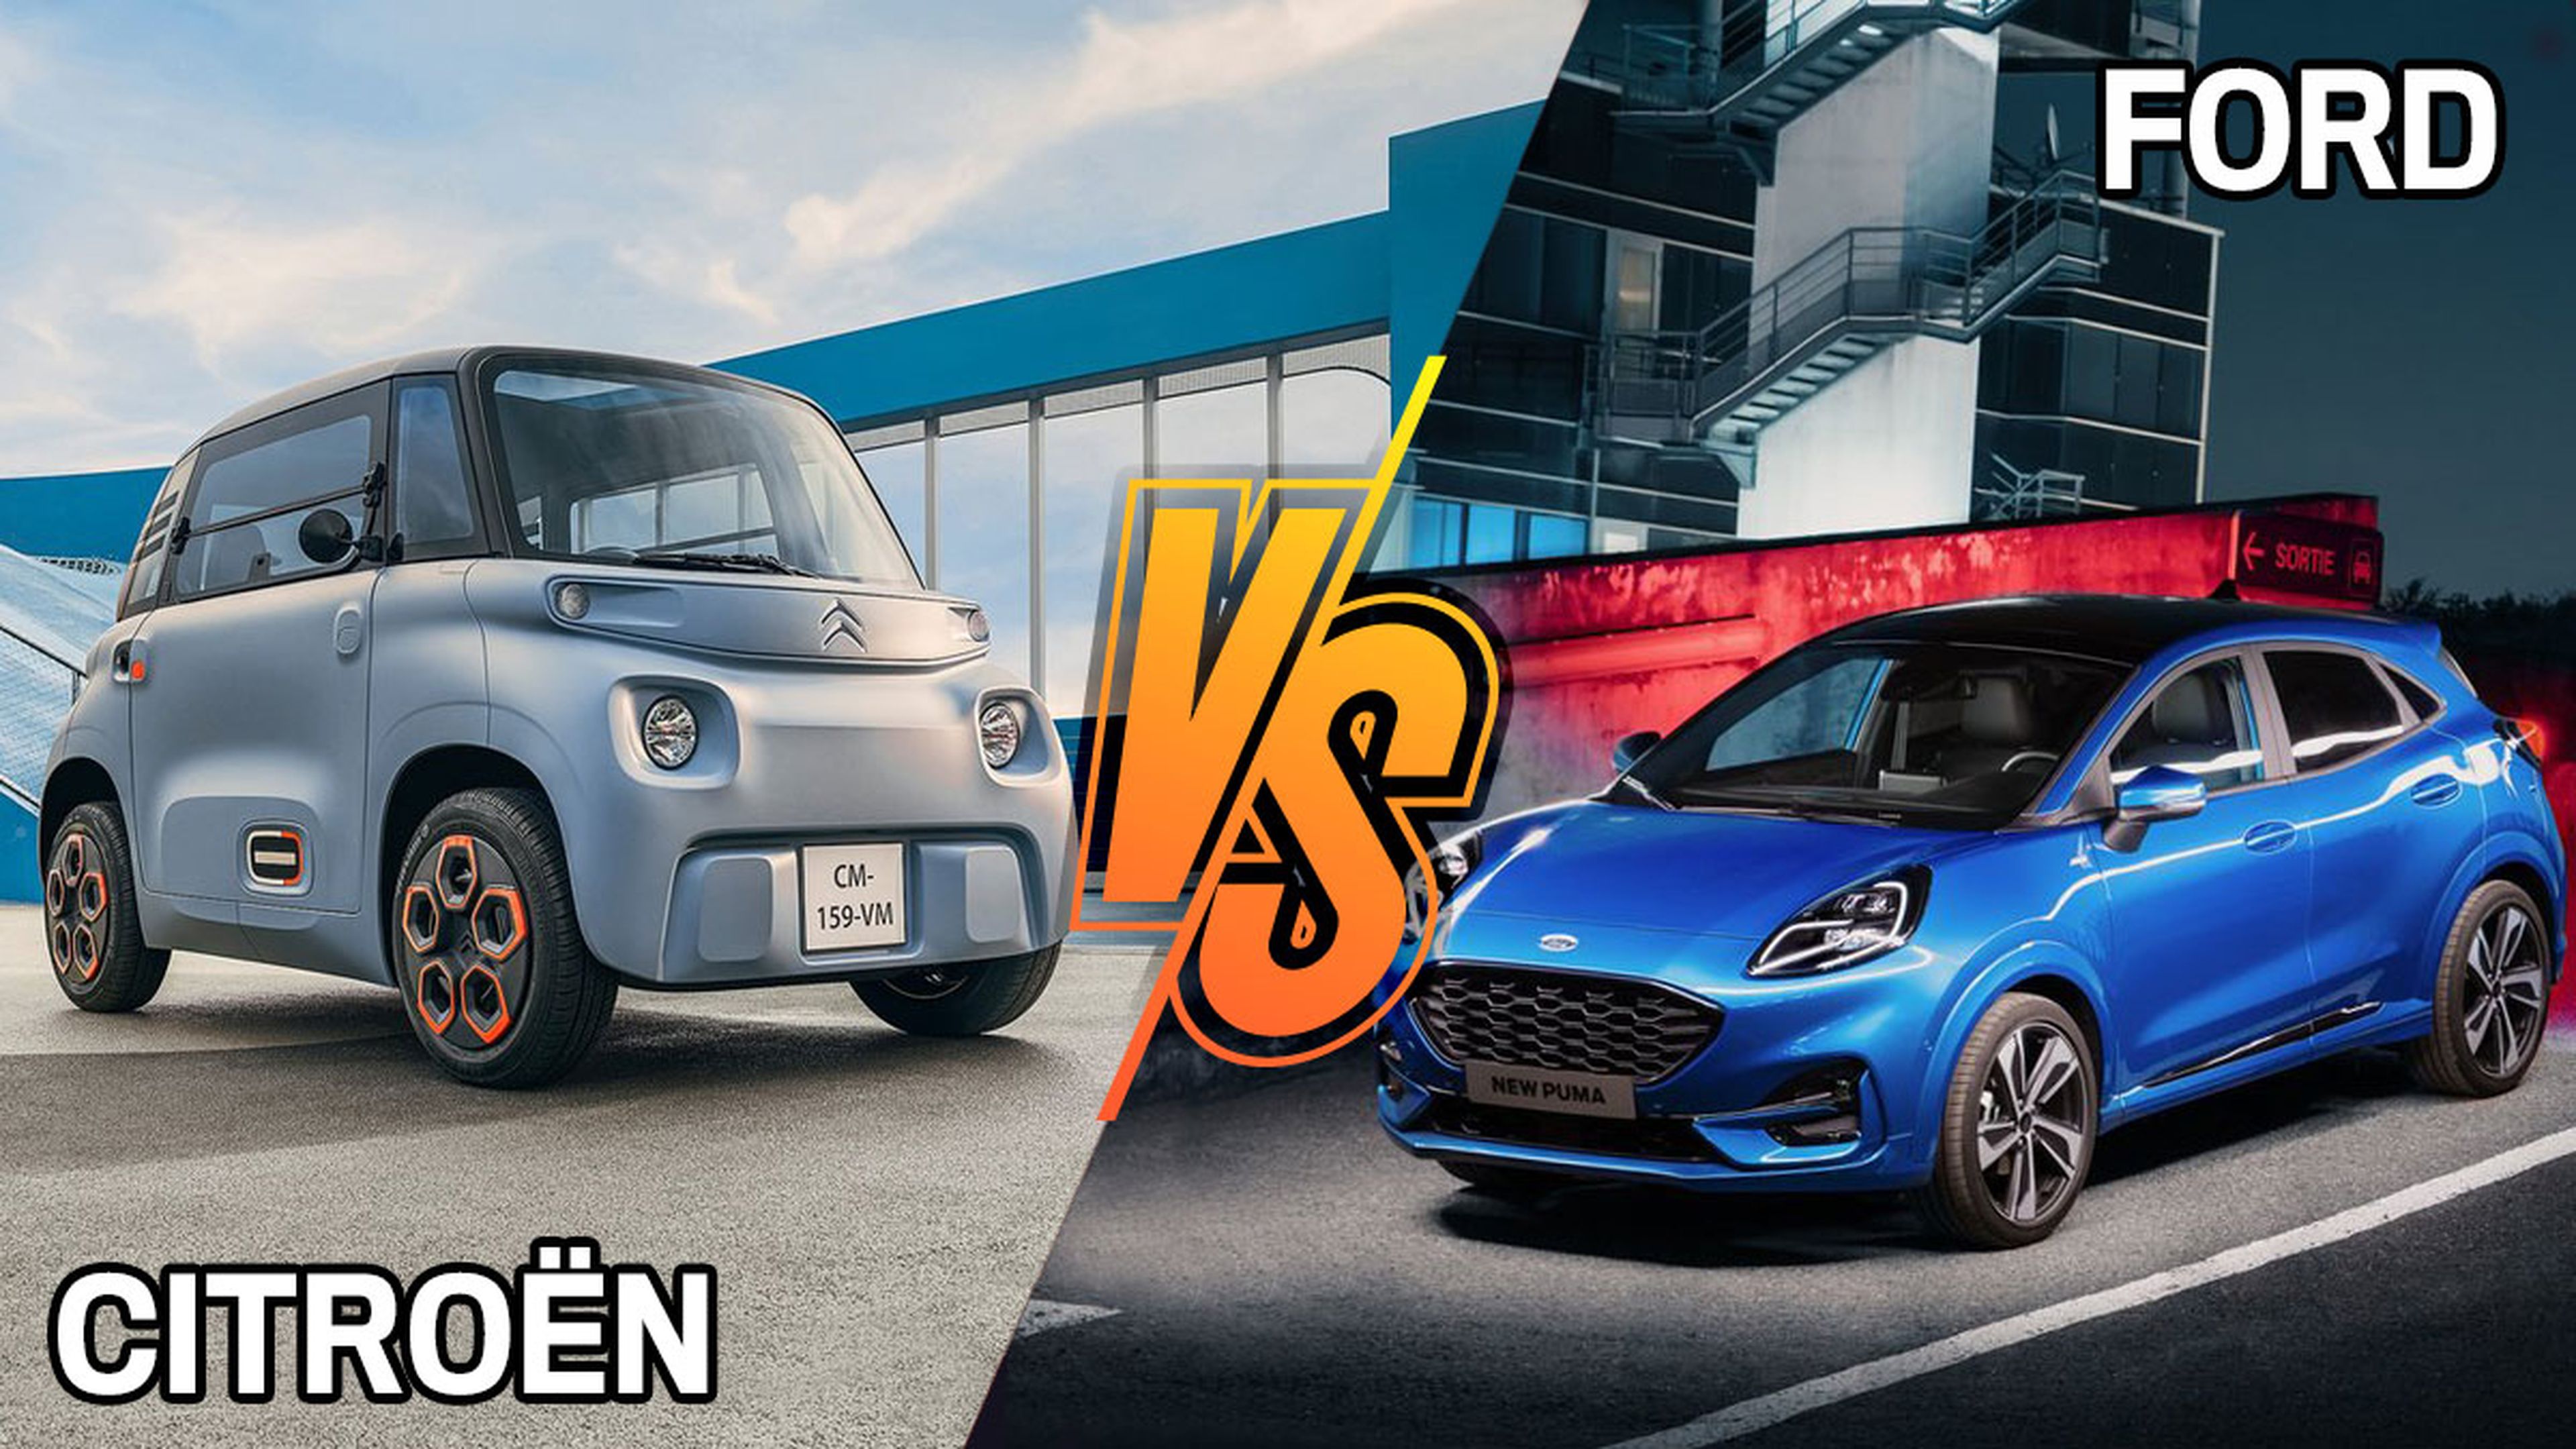 Ford vs Citroën